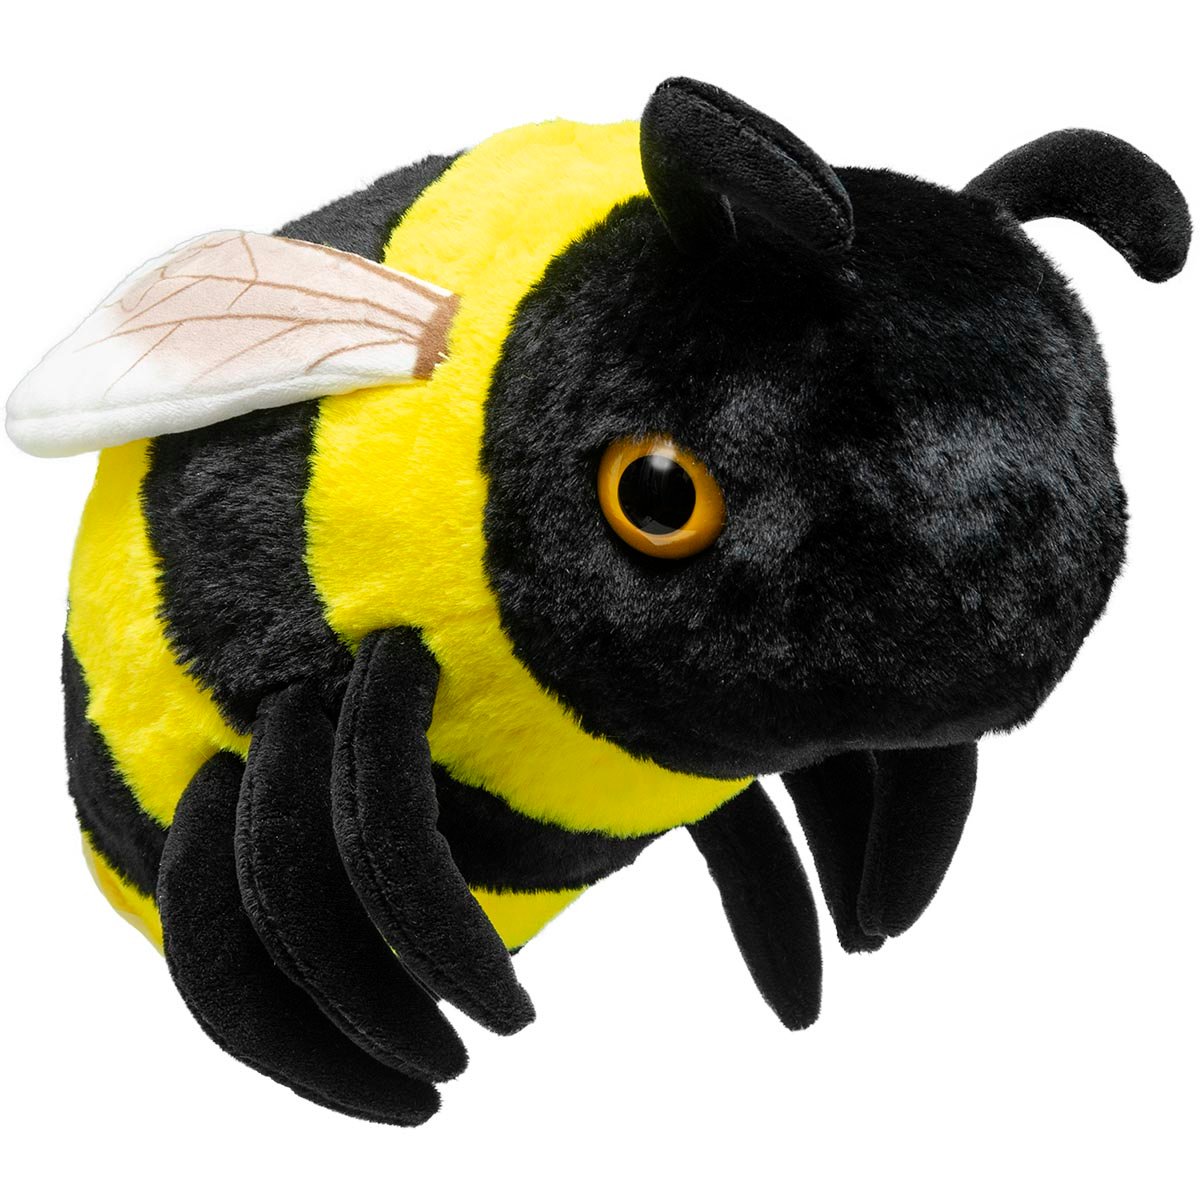 https://gifts.worldwildlife.org/gift-center/images/species-adoptions/Bumblebee/Bumblebee-plush-z3.jpg